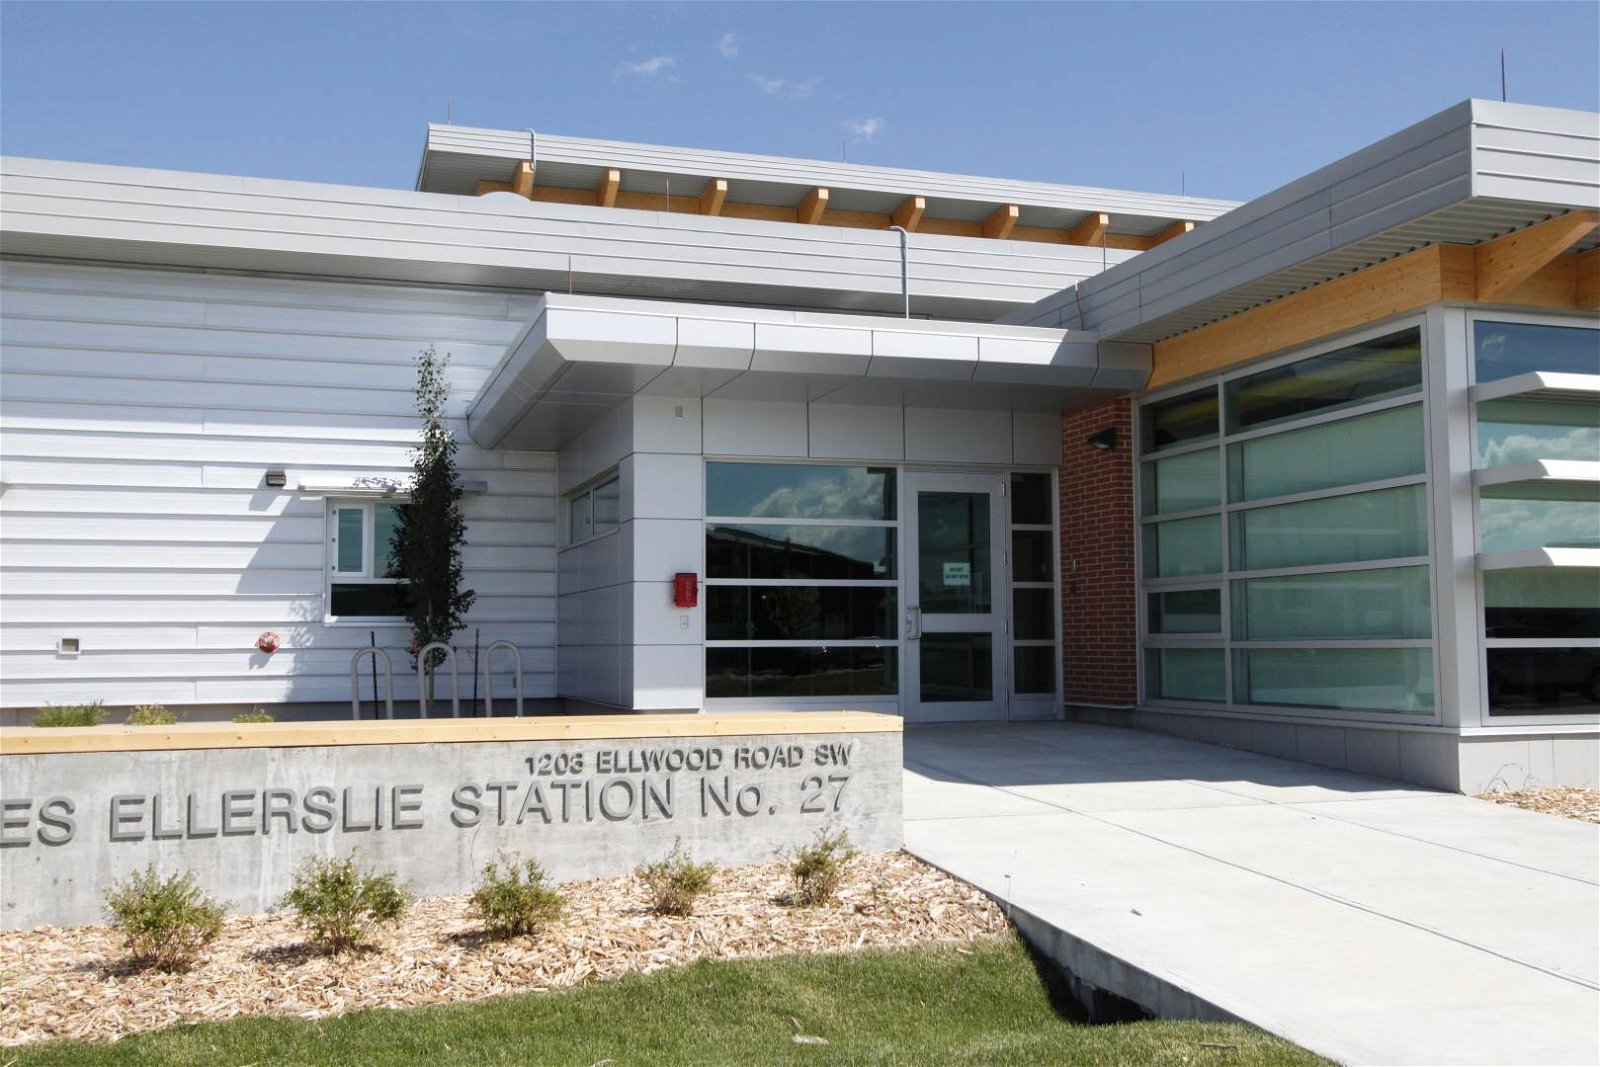 Fire Rescue Services Ellerslie Station No. 27